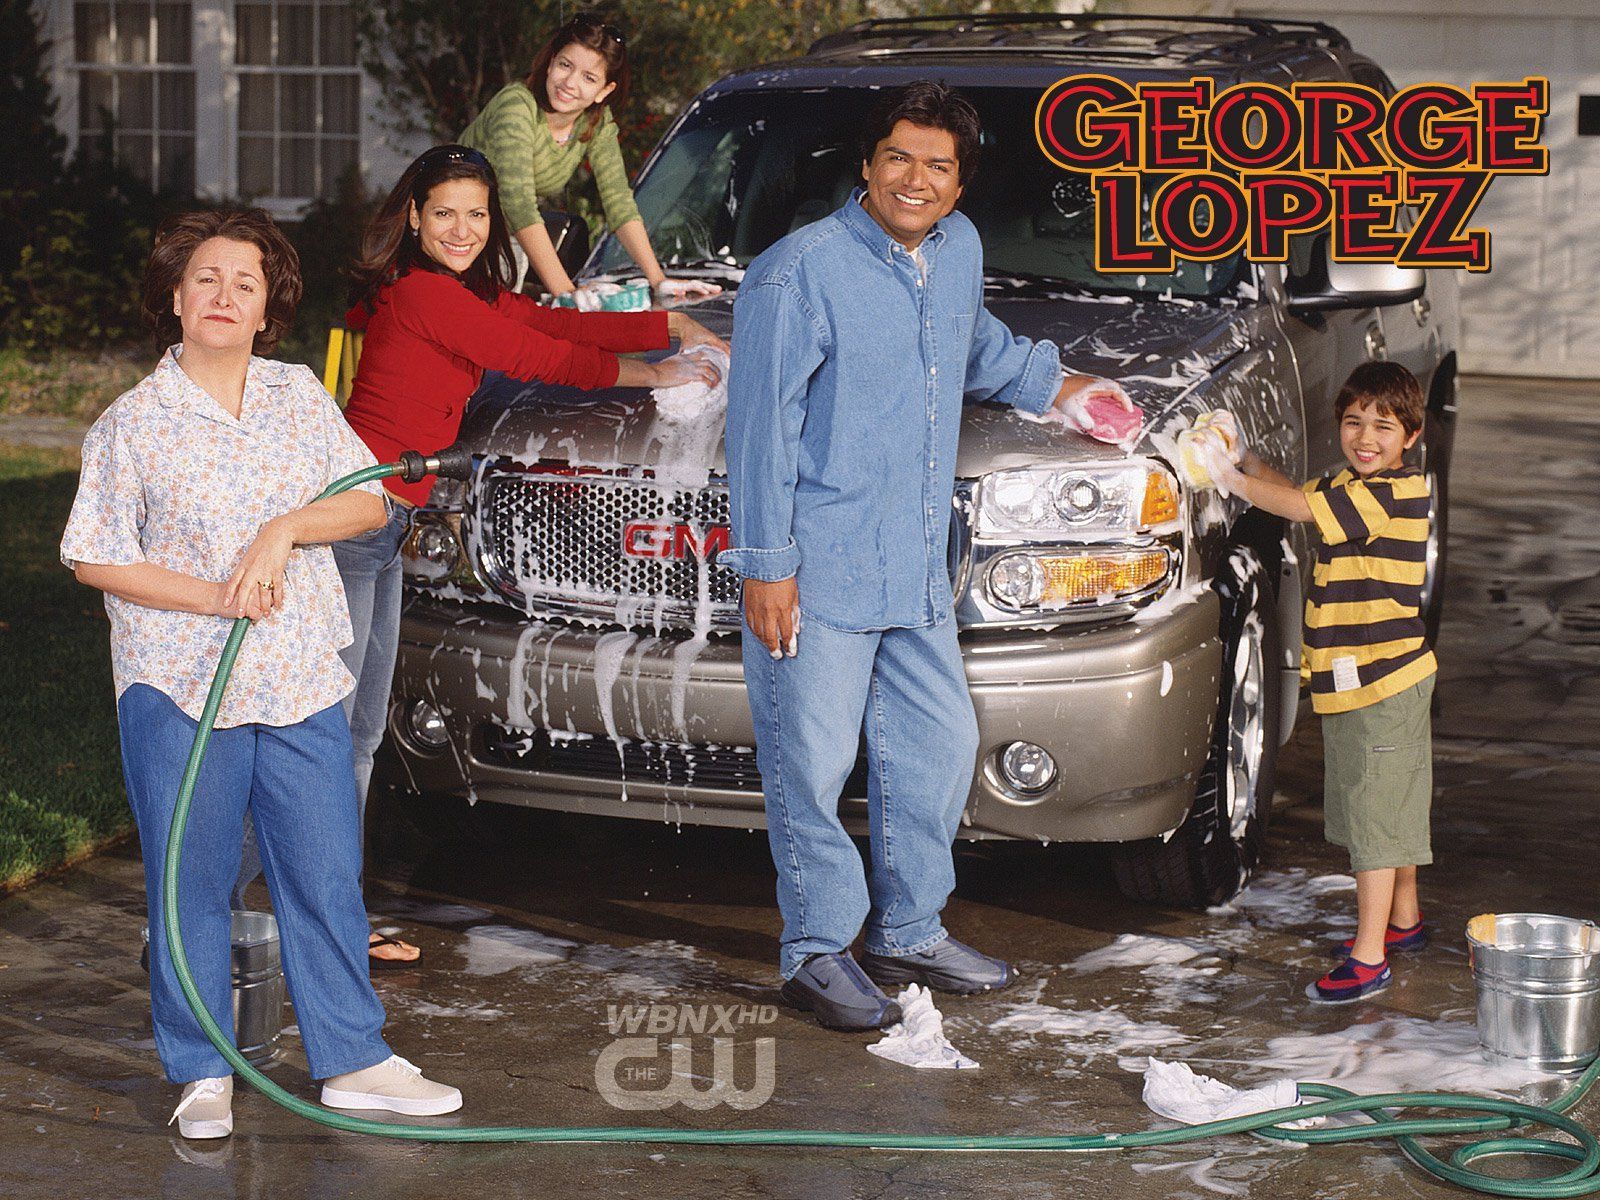 Funny Quotes Celebrity Wallpaper. George lopez, Lopez show, Tv show house